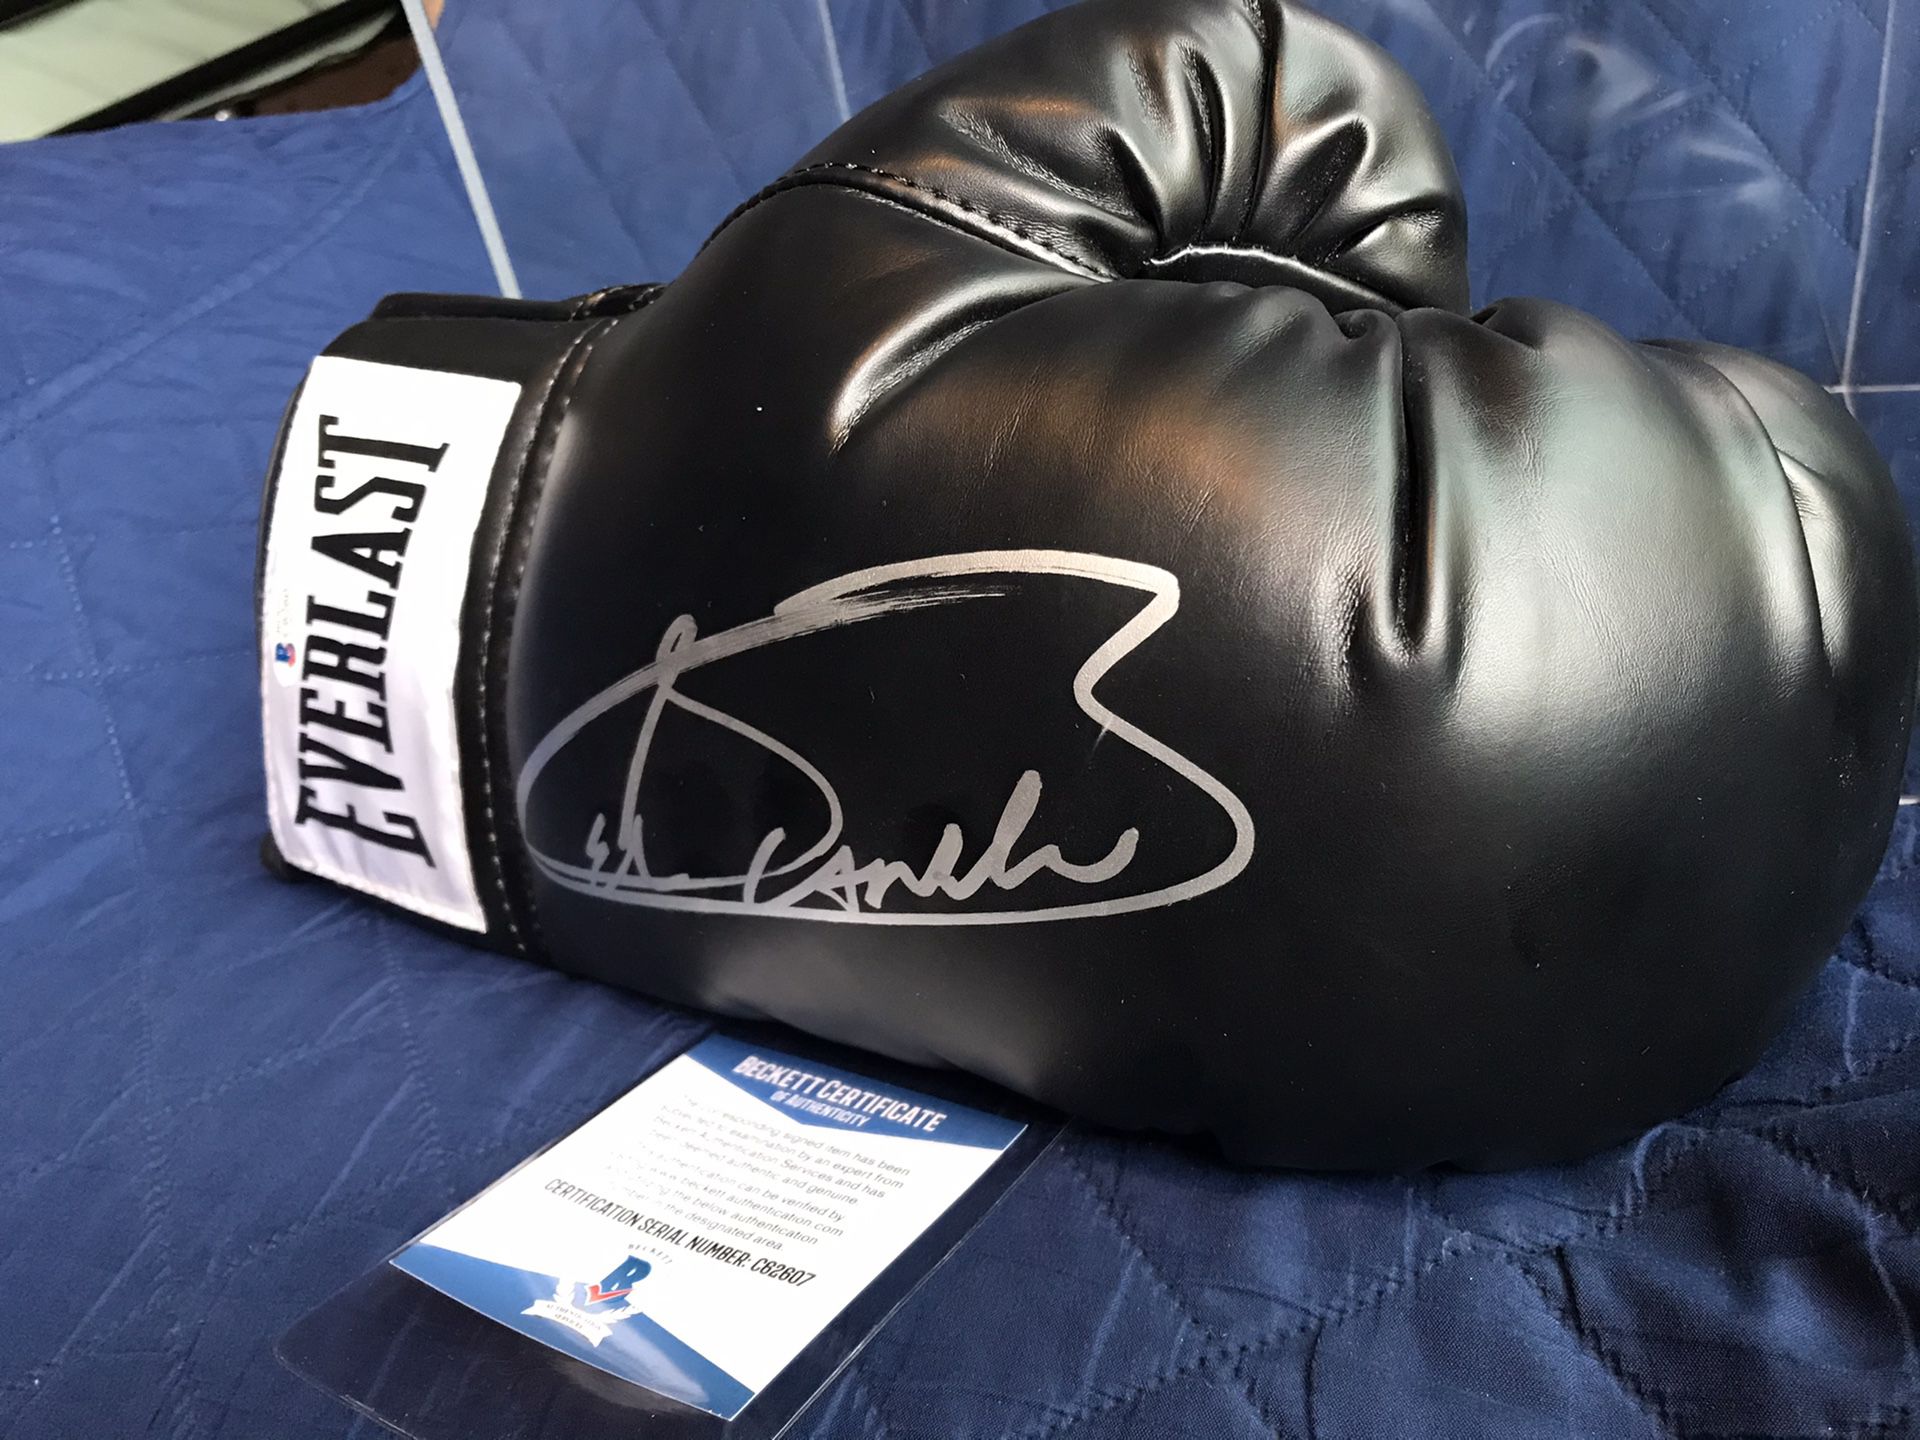 Canelo Alvarez boxing glove